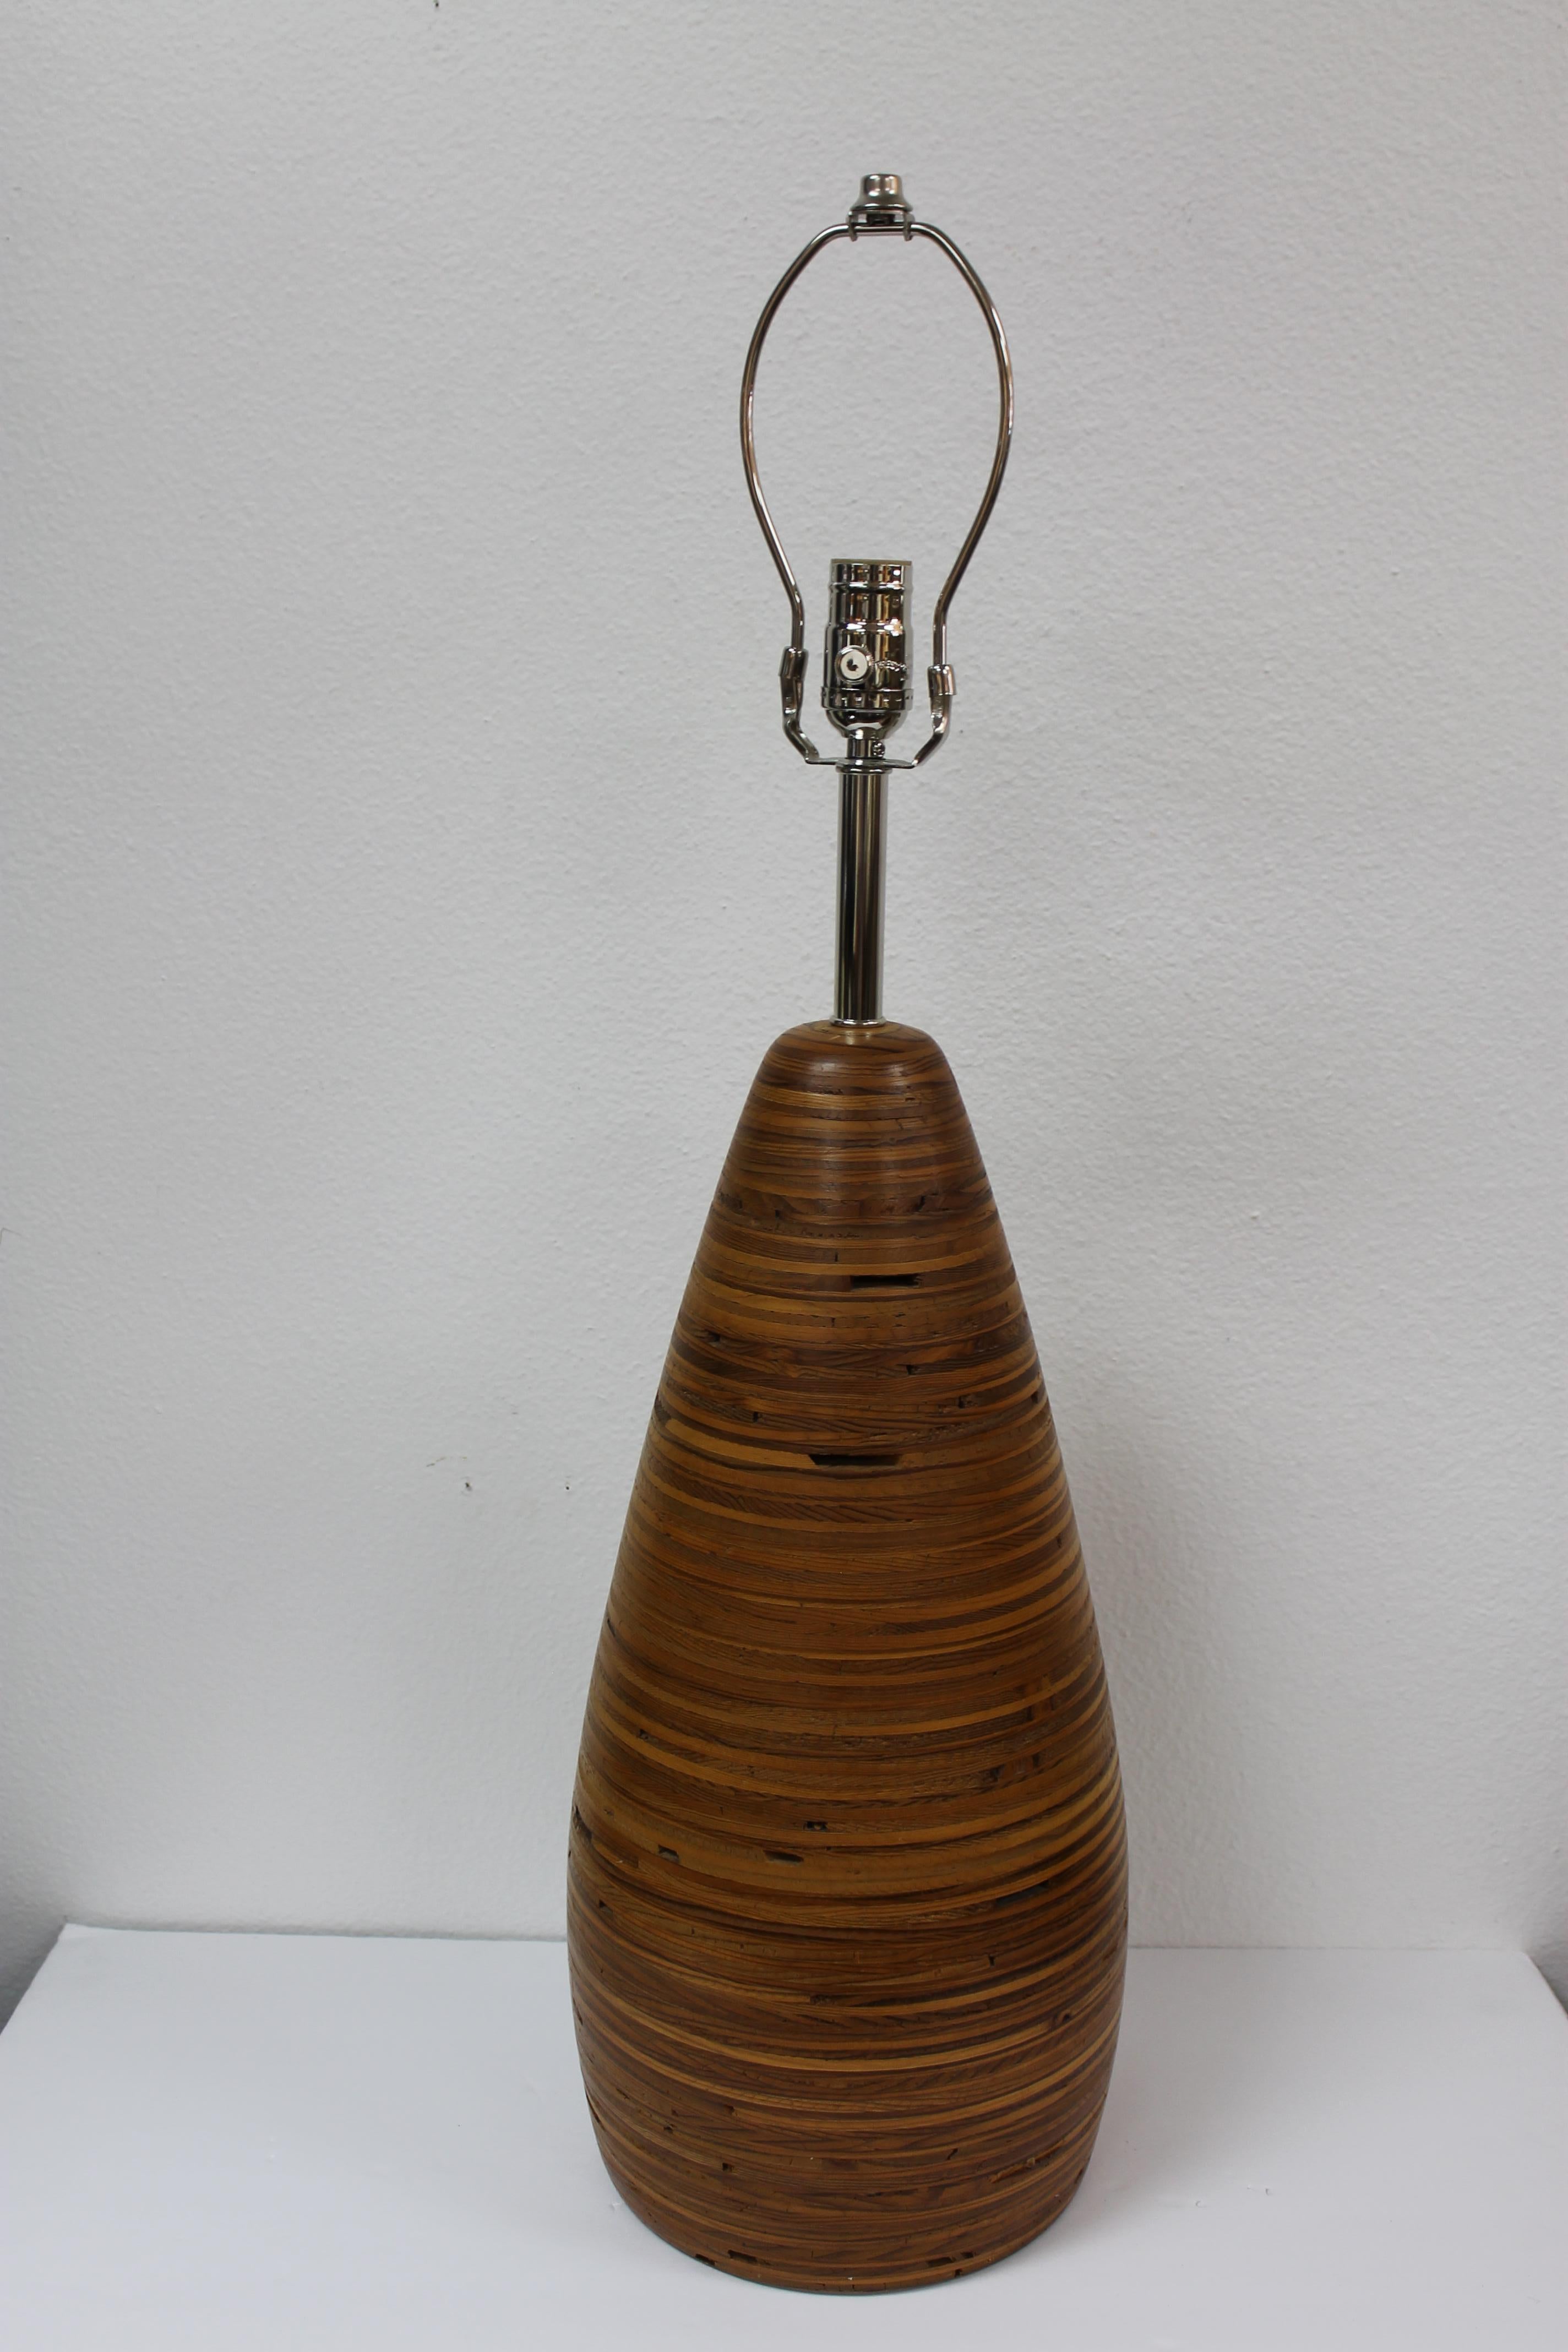 George Kovacs wood lamp. Wood section measures 20.5